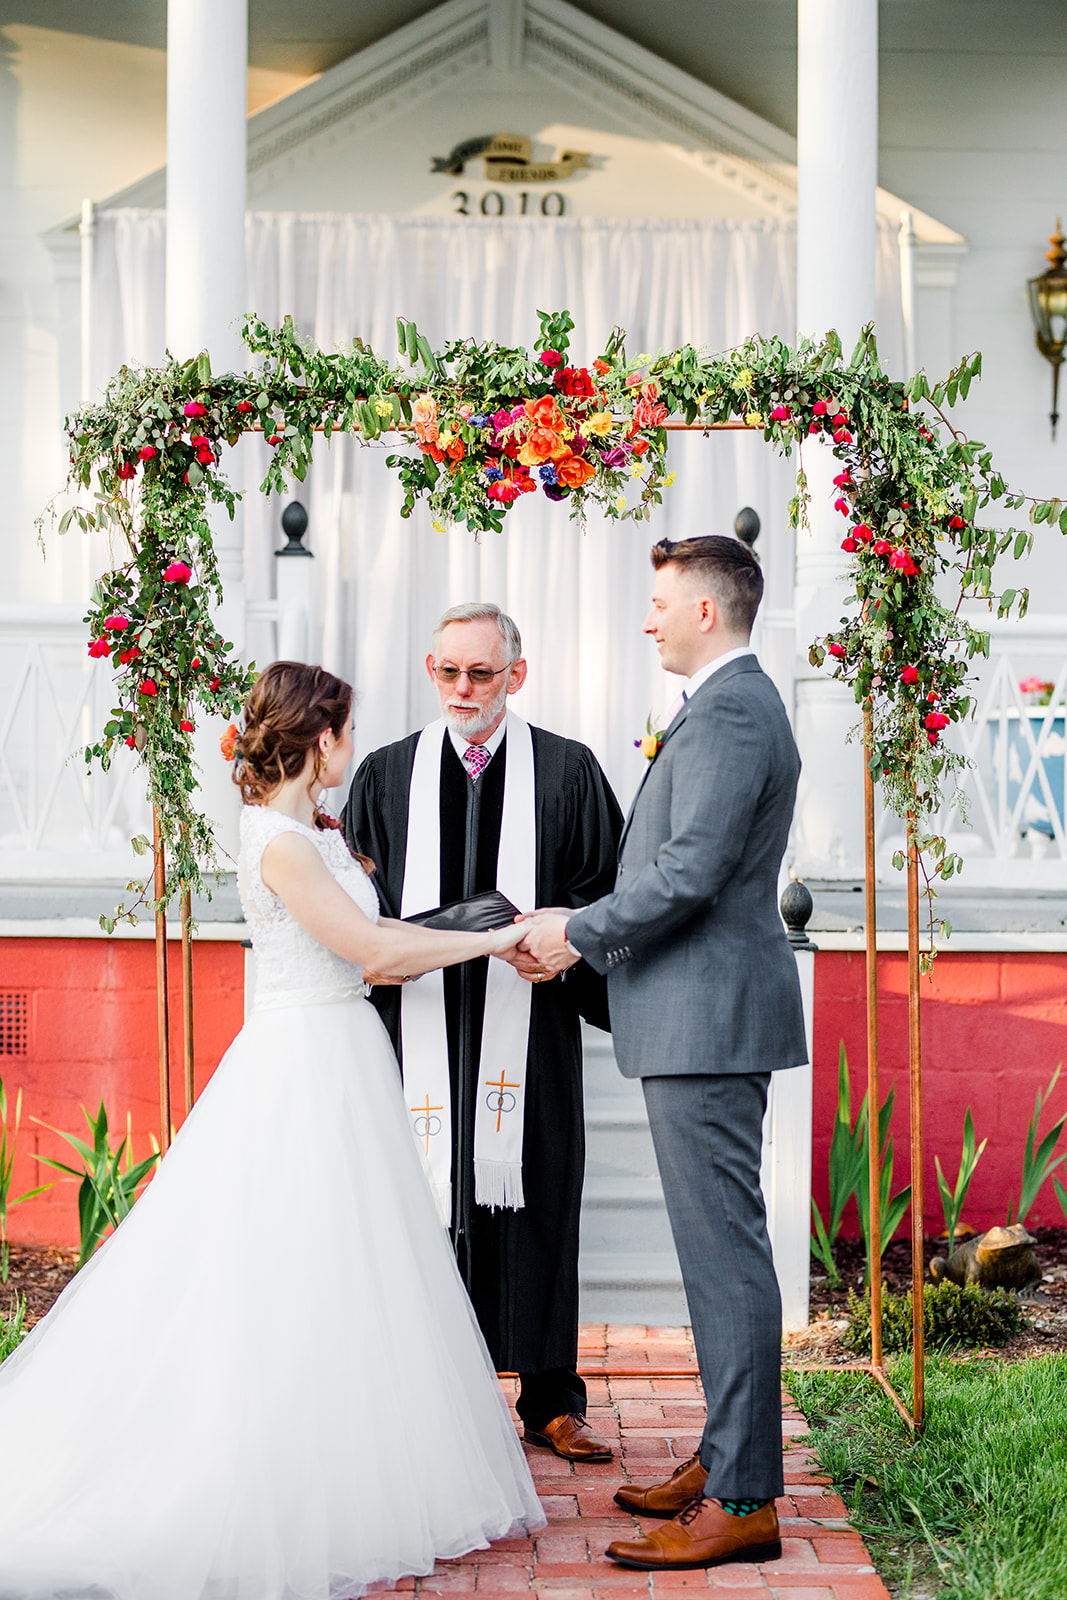 Bright + Cheerful Garden Elegance of Artmosphere — Ceremony of the Bride + Groom